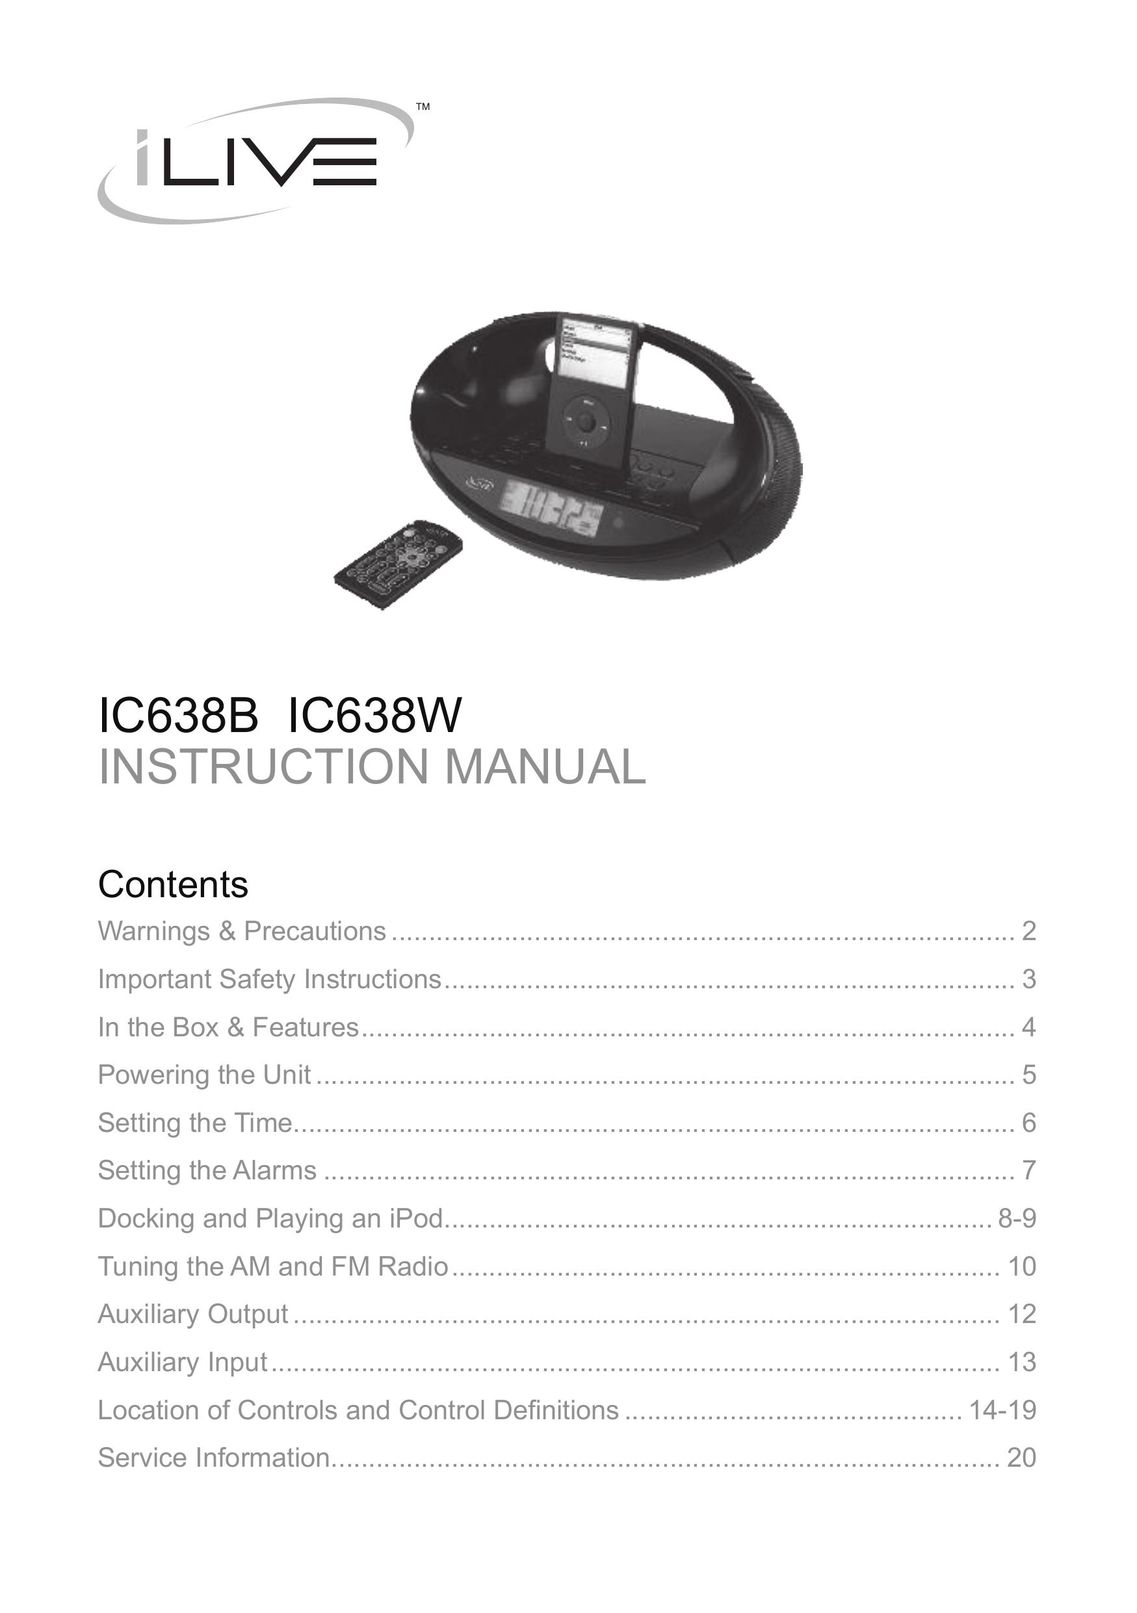 iLive ic638B CD Player User Manual